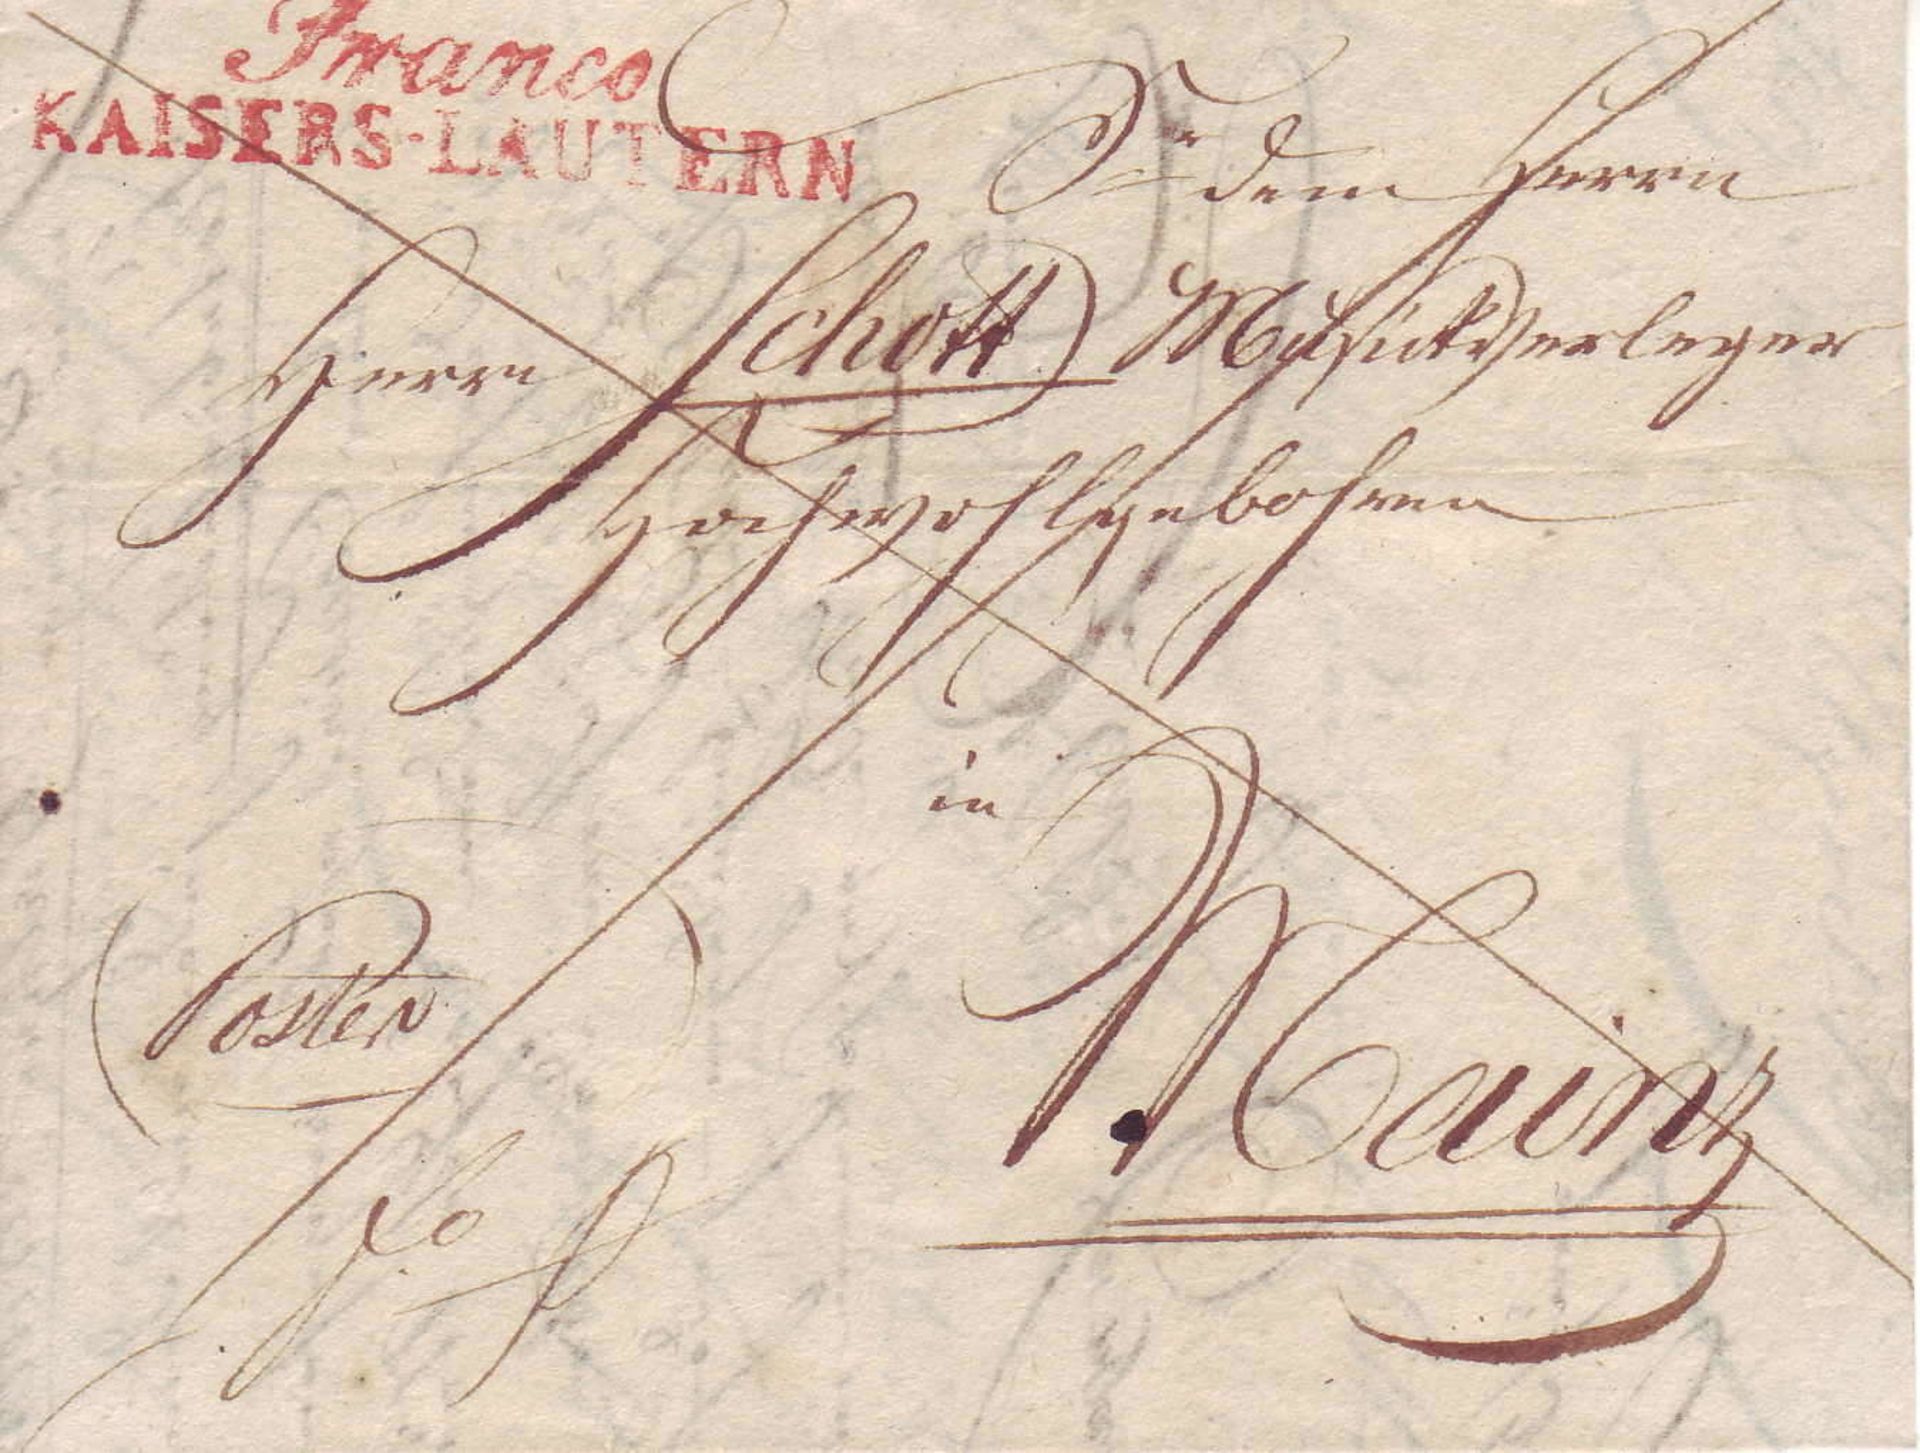 Beleg Vorphilatelie, mit rotem Stempel "Franco Kaiserslautern" Document prephilatelie, with red